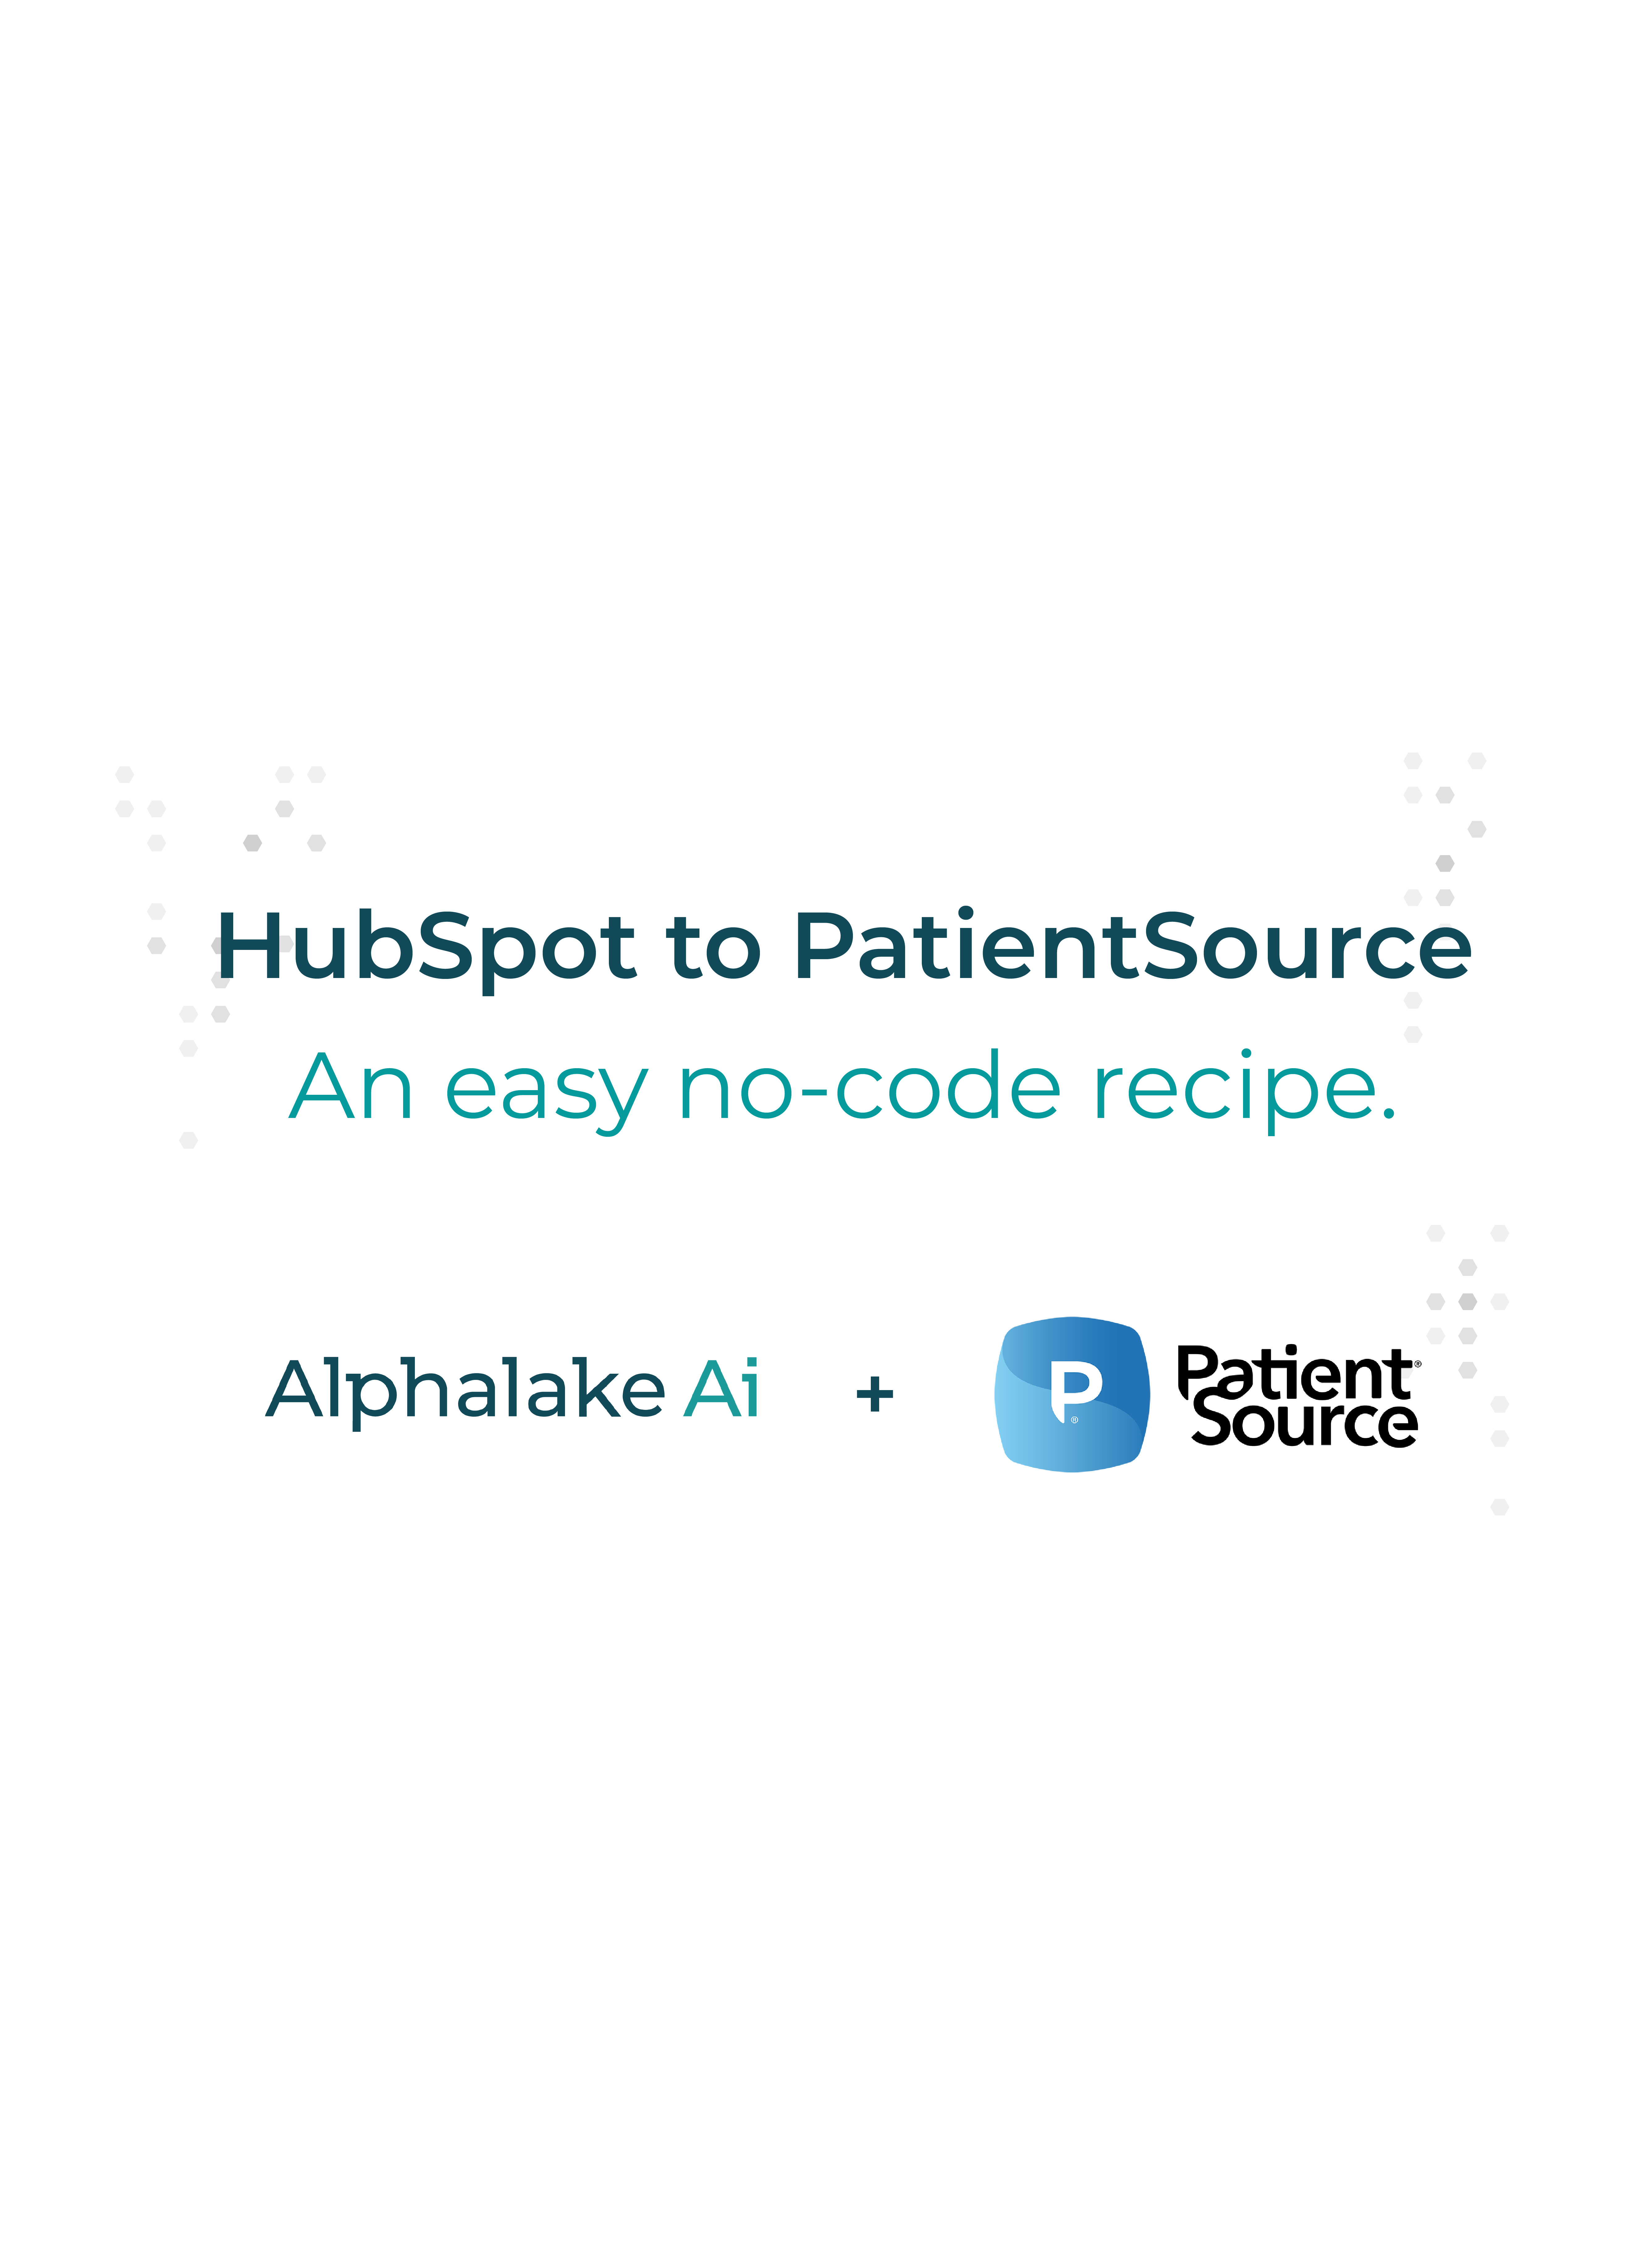 Hubspot to PatientSource, An Easy No-Code Recipe